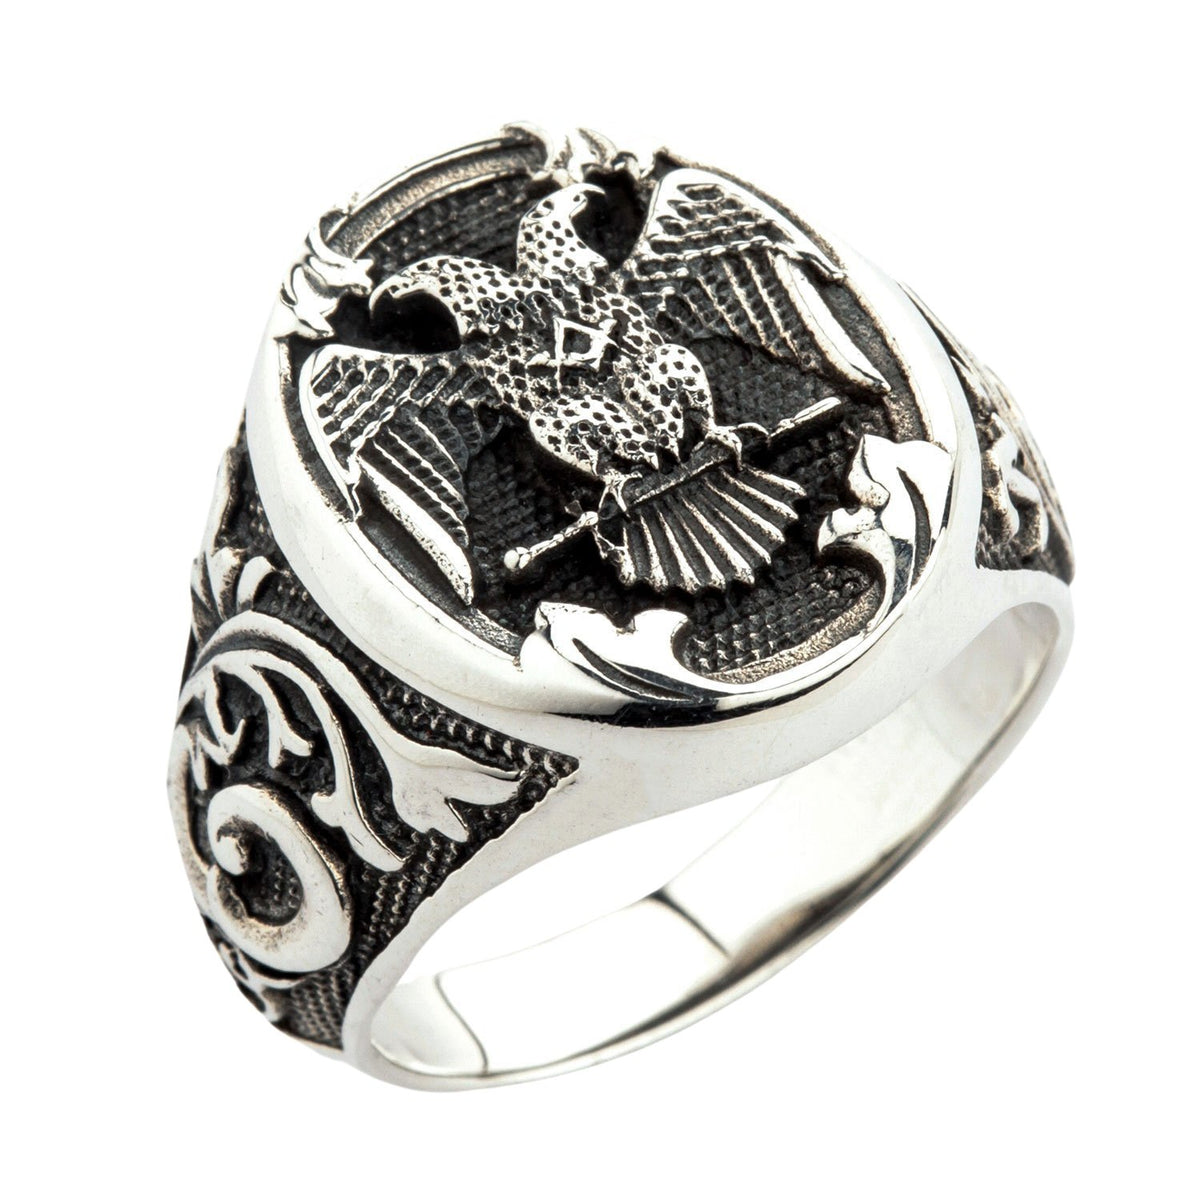 Silver Scottish Rite Double-headed Eagle Masonic Ring